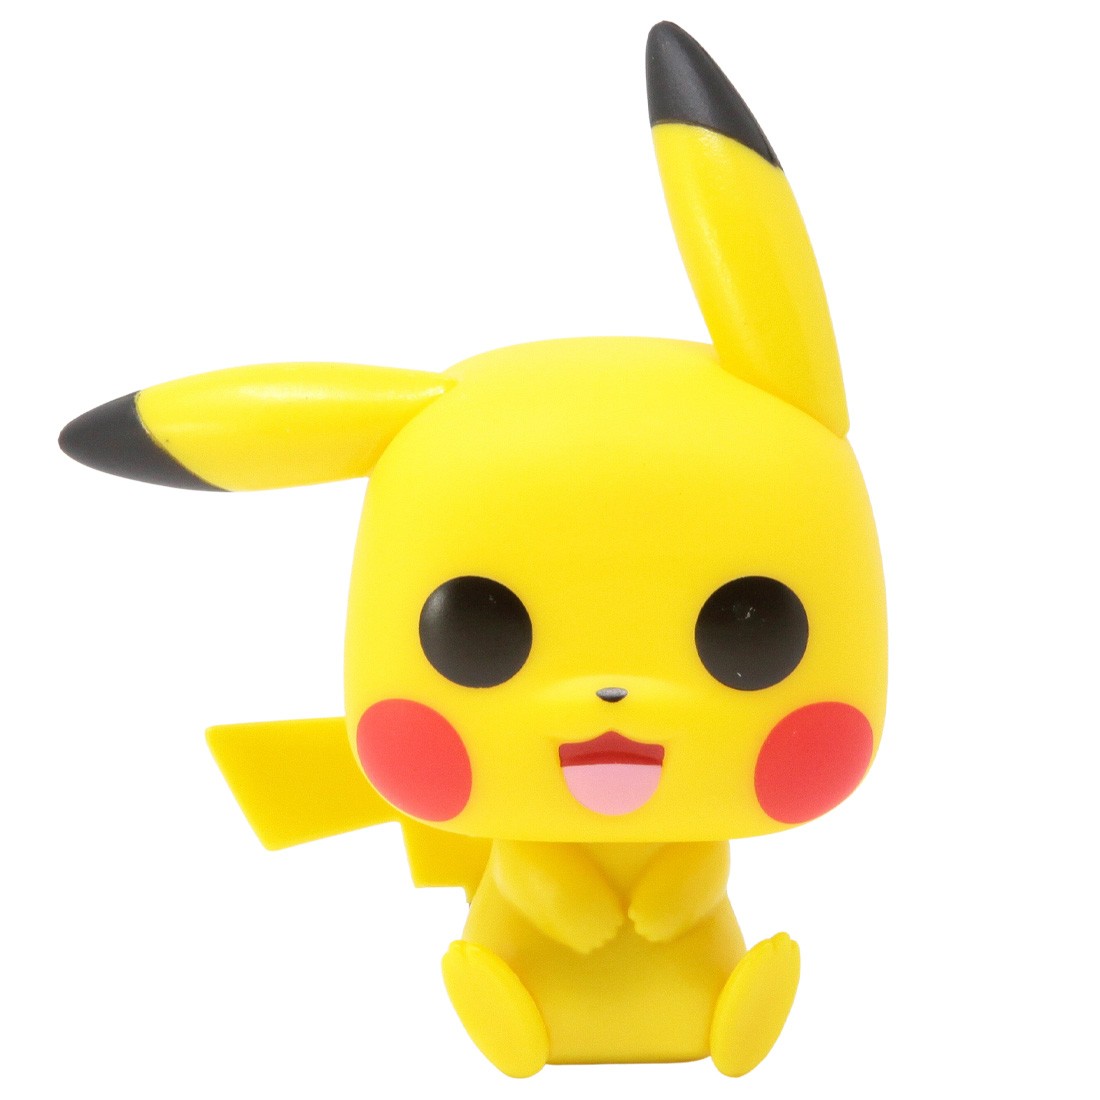 Funko POP Games Pokemon - Pikachu Sitting yellow